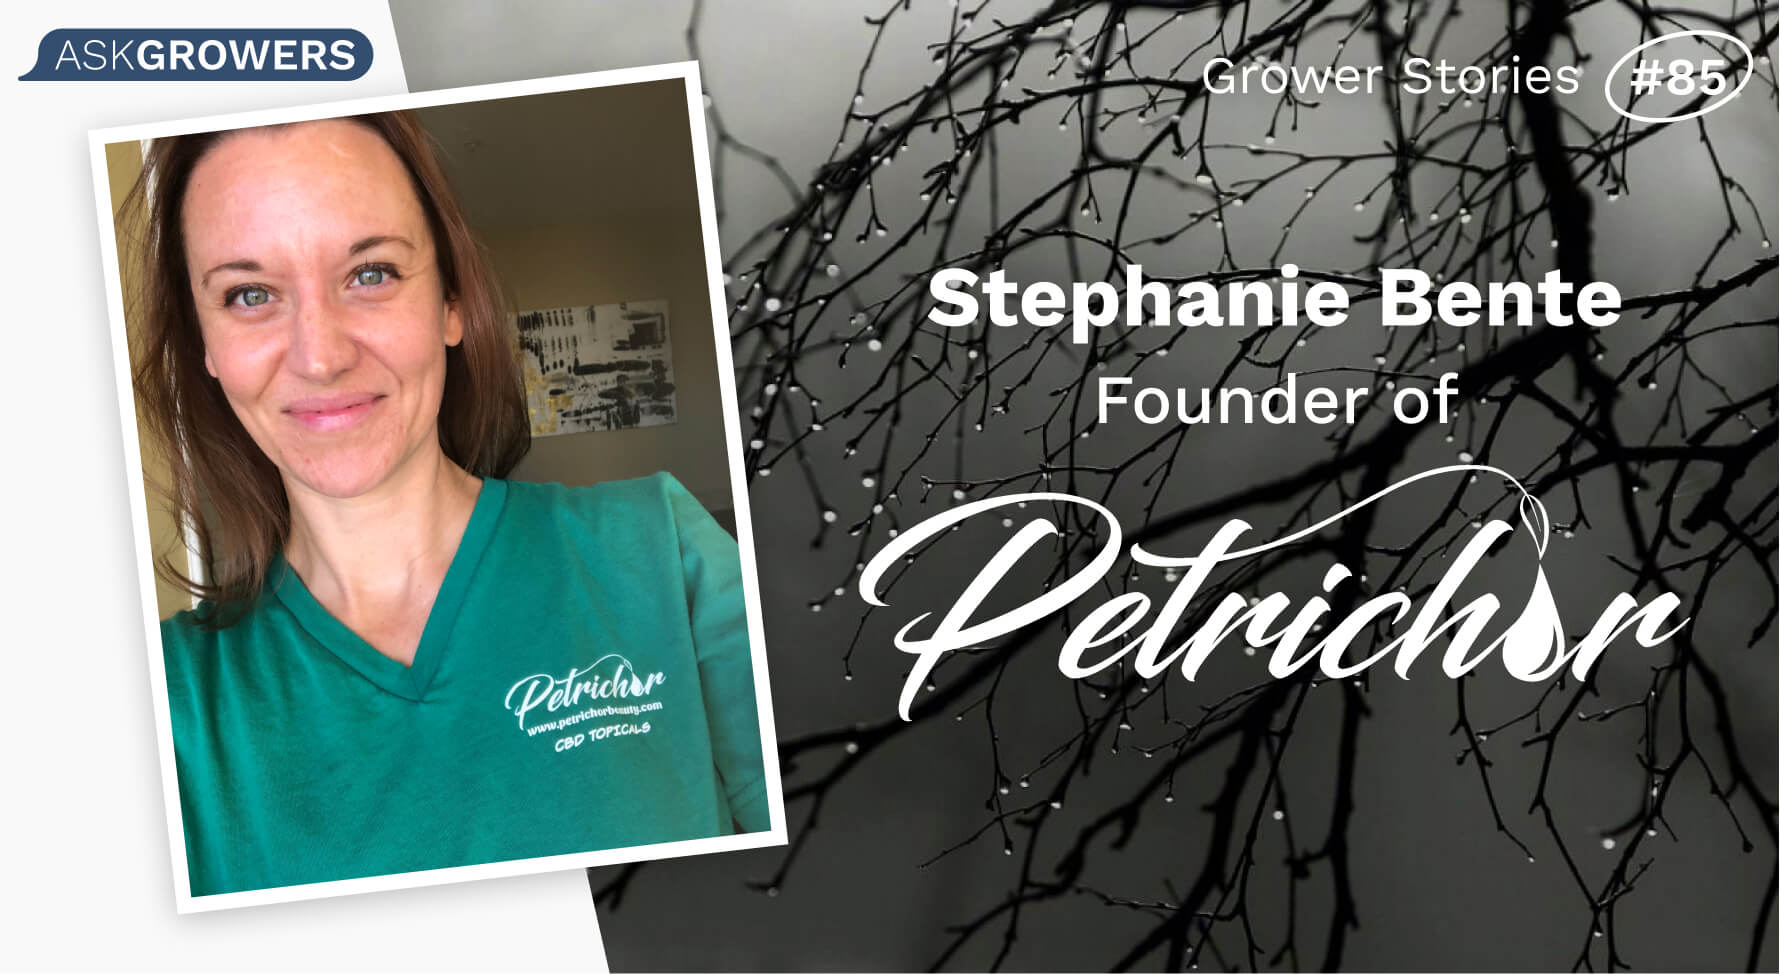 Grower Stories #85: Stephanie Bente